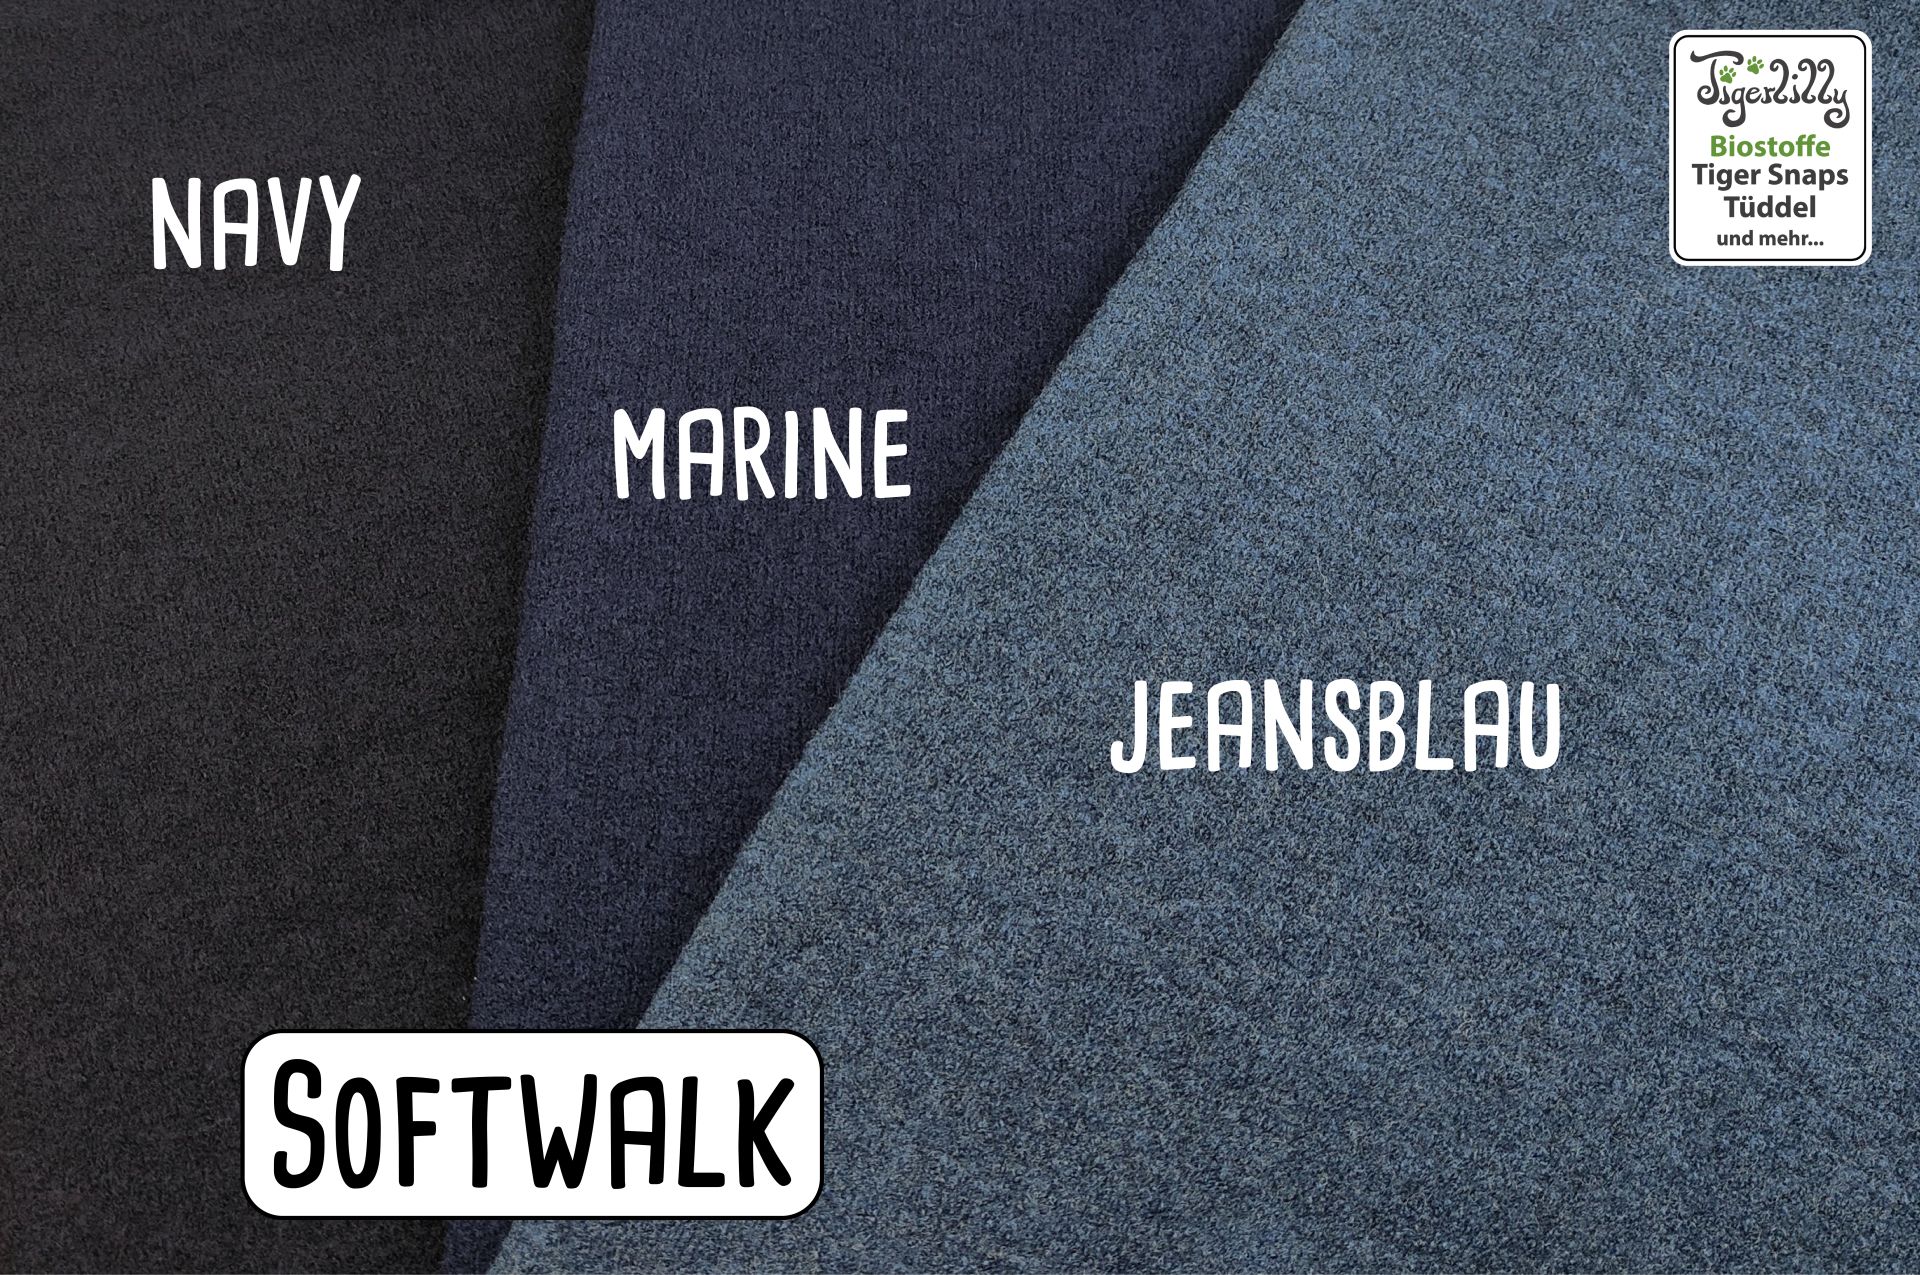 Softwalk navy marine jeansblau-01